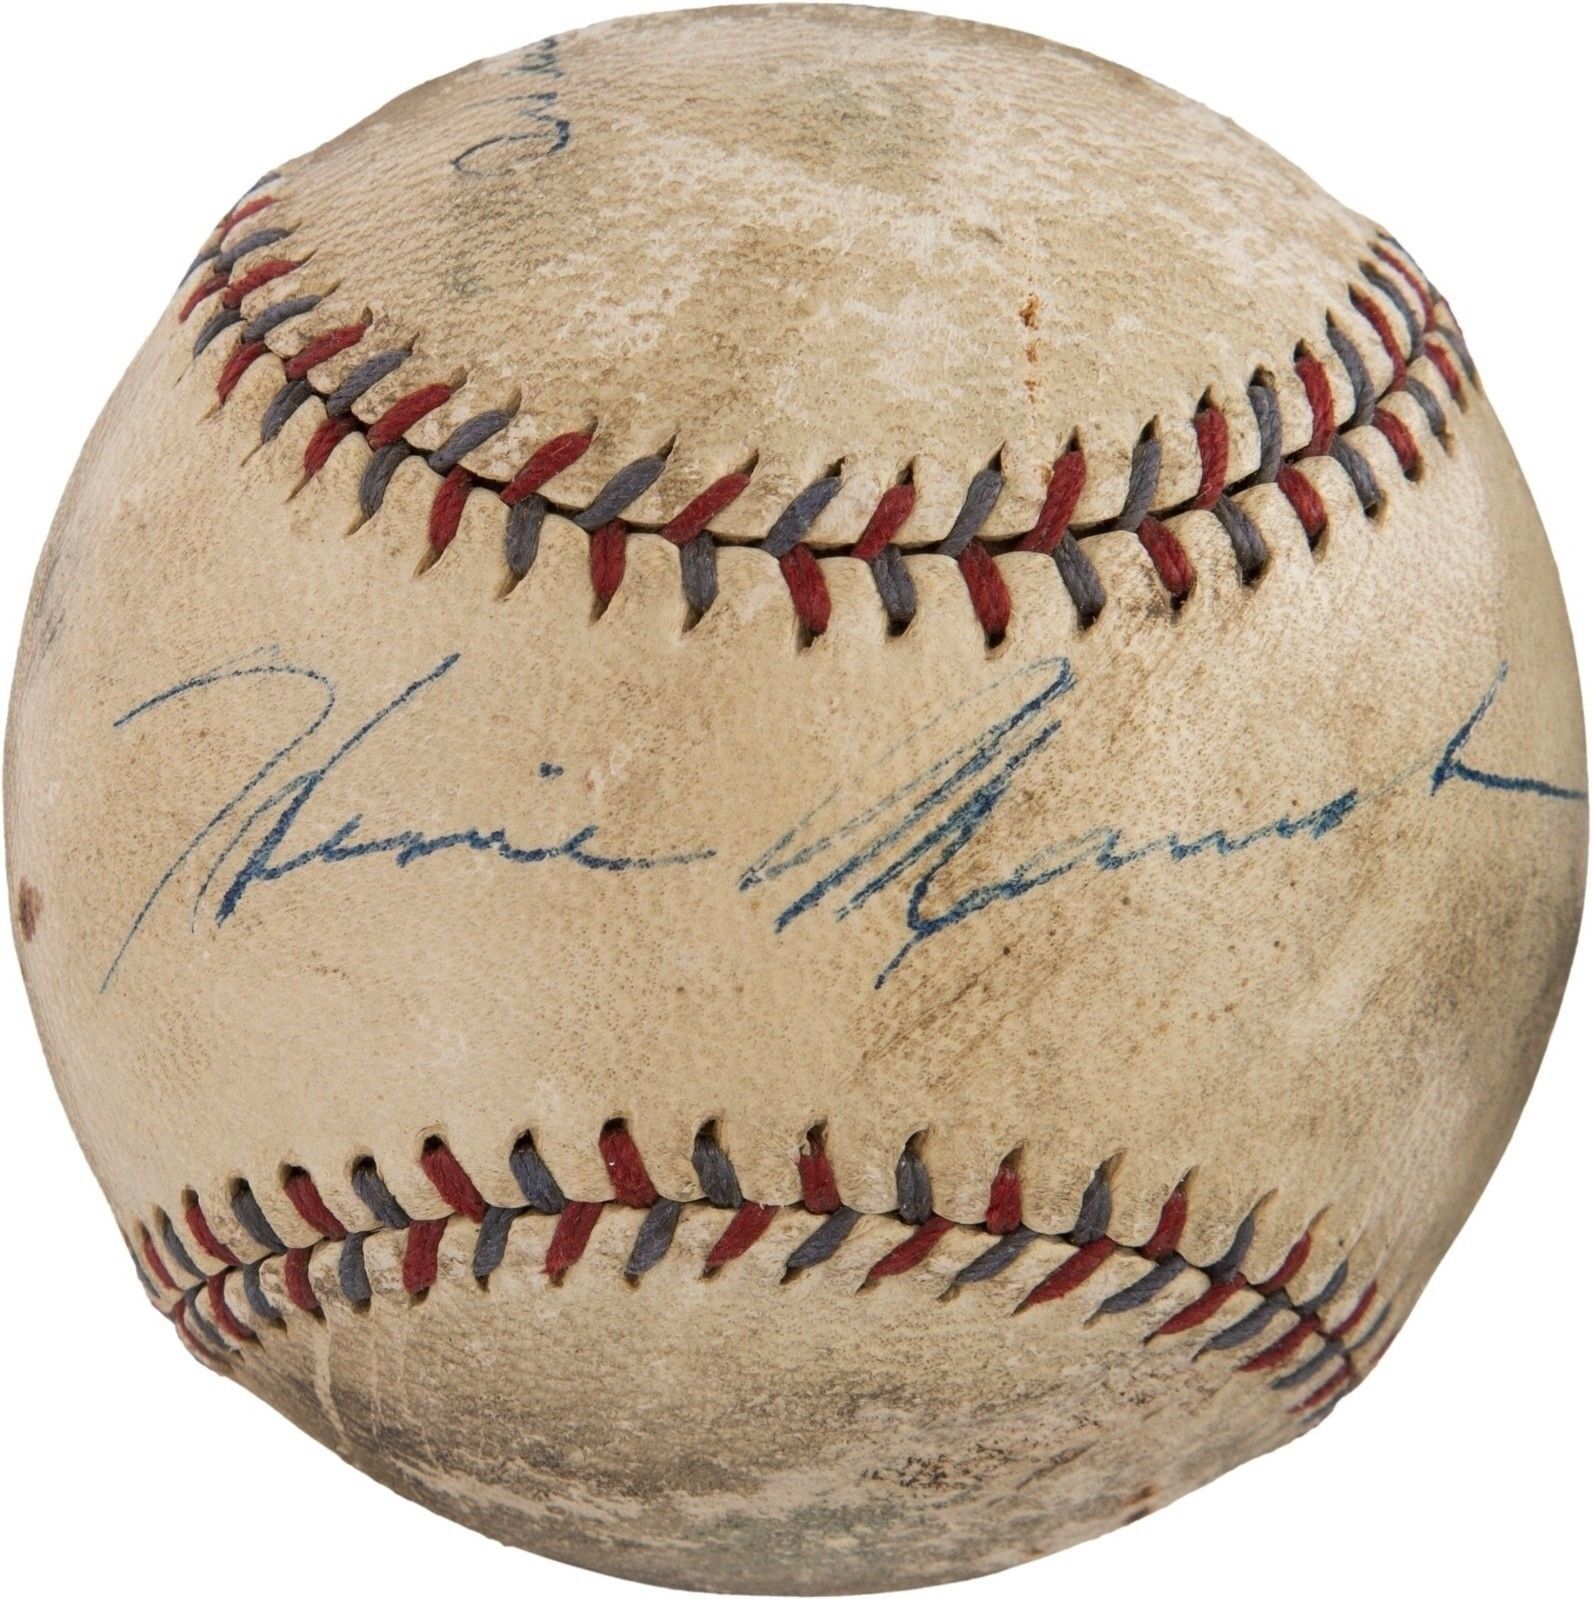 Beautiful 1932 Heinie Manush Signed Official American League Baseball PSA DNA